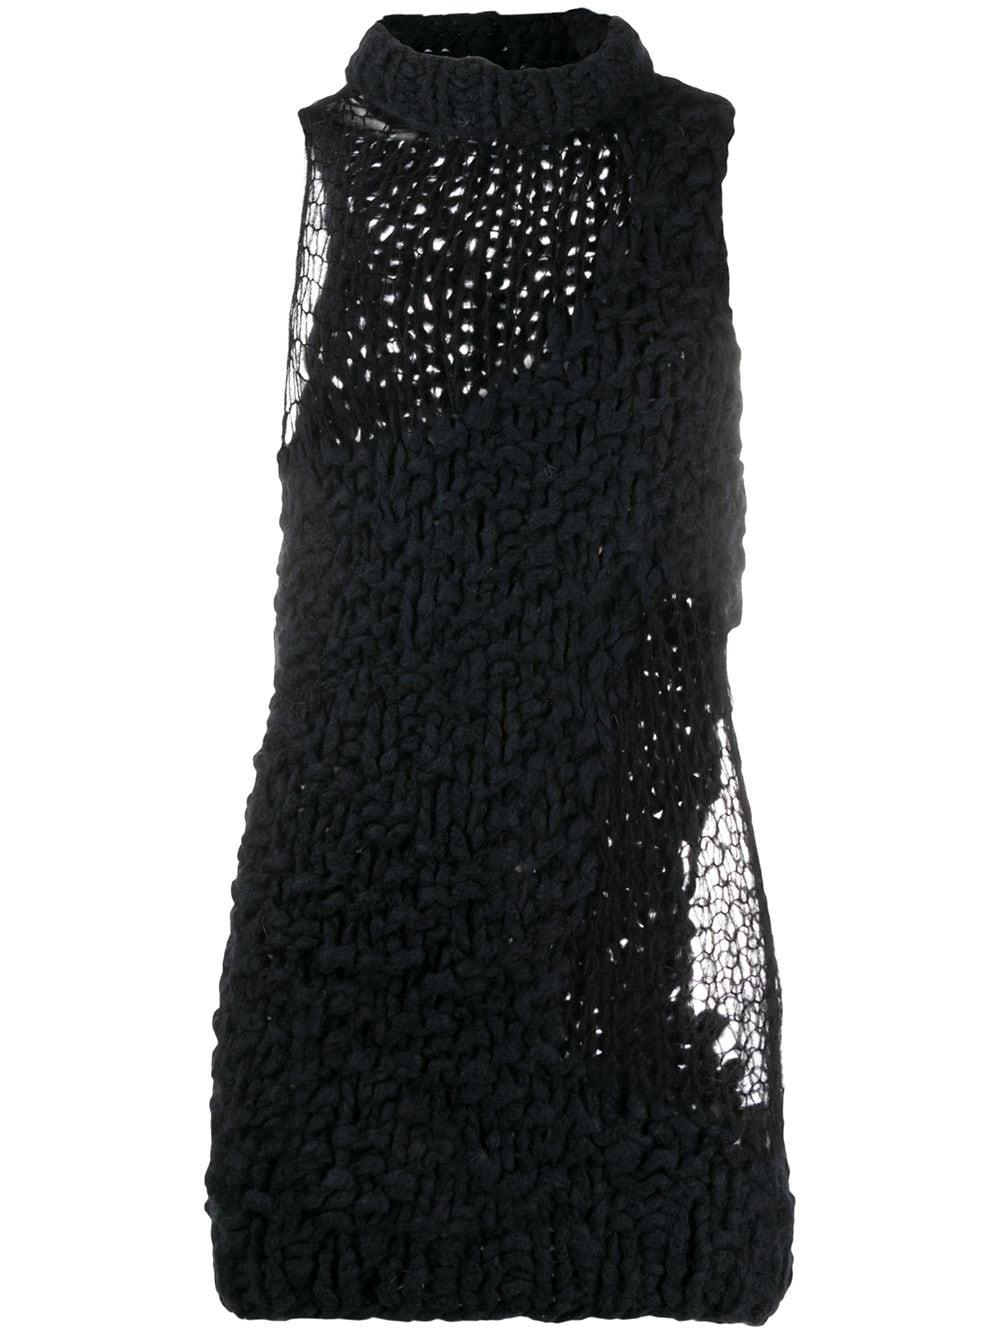 Ann Demeulemeester Wool Textured Knit Top in Black - Lyst